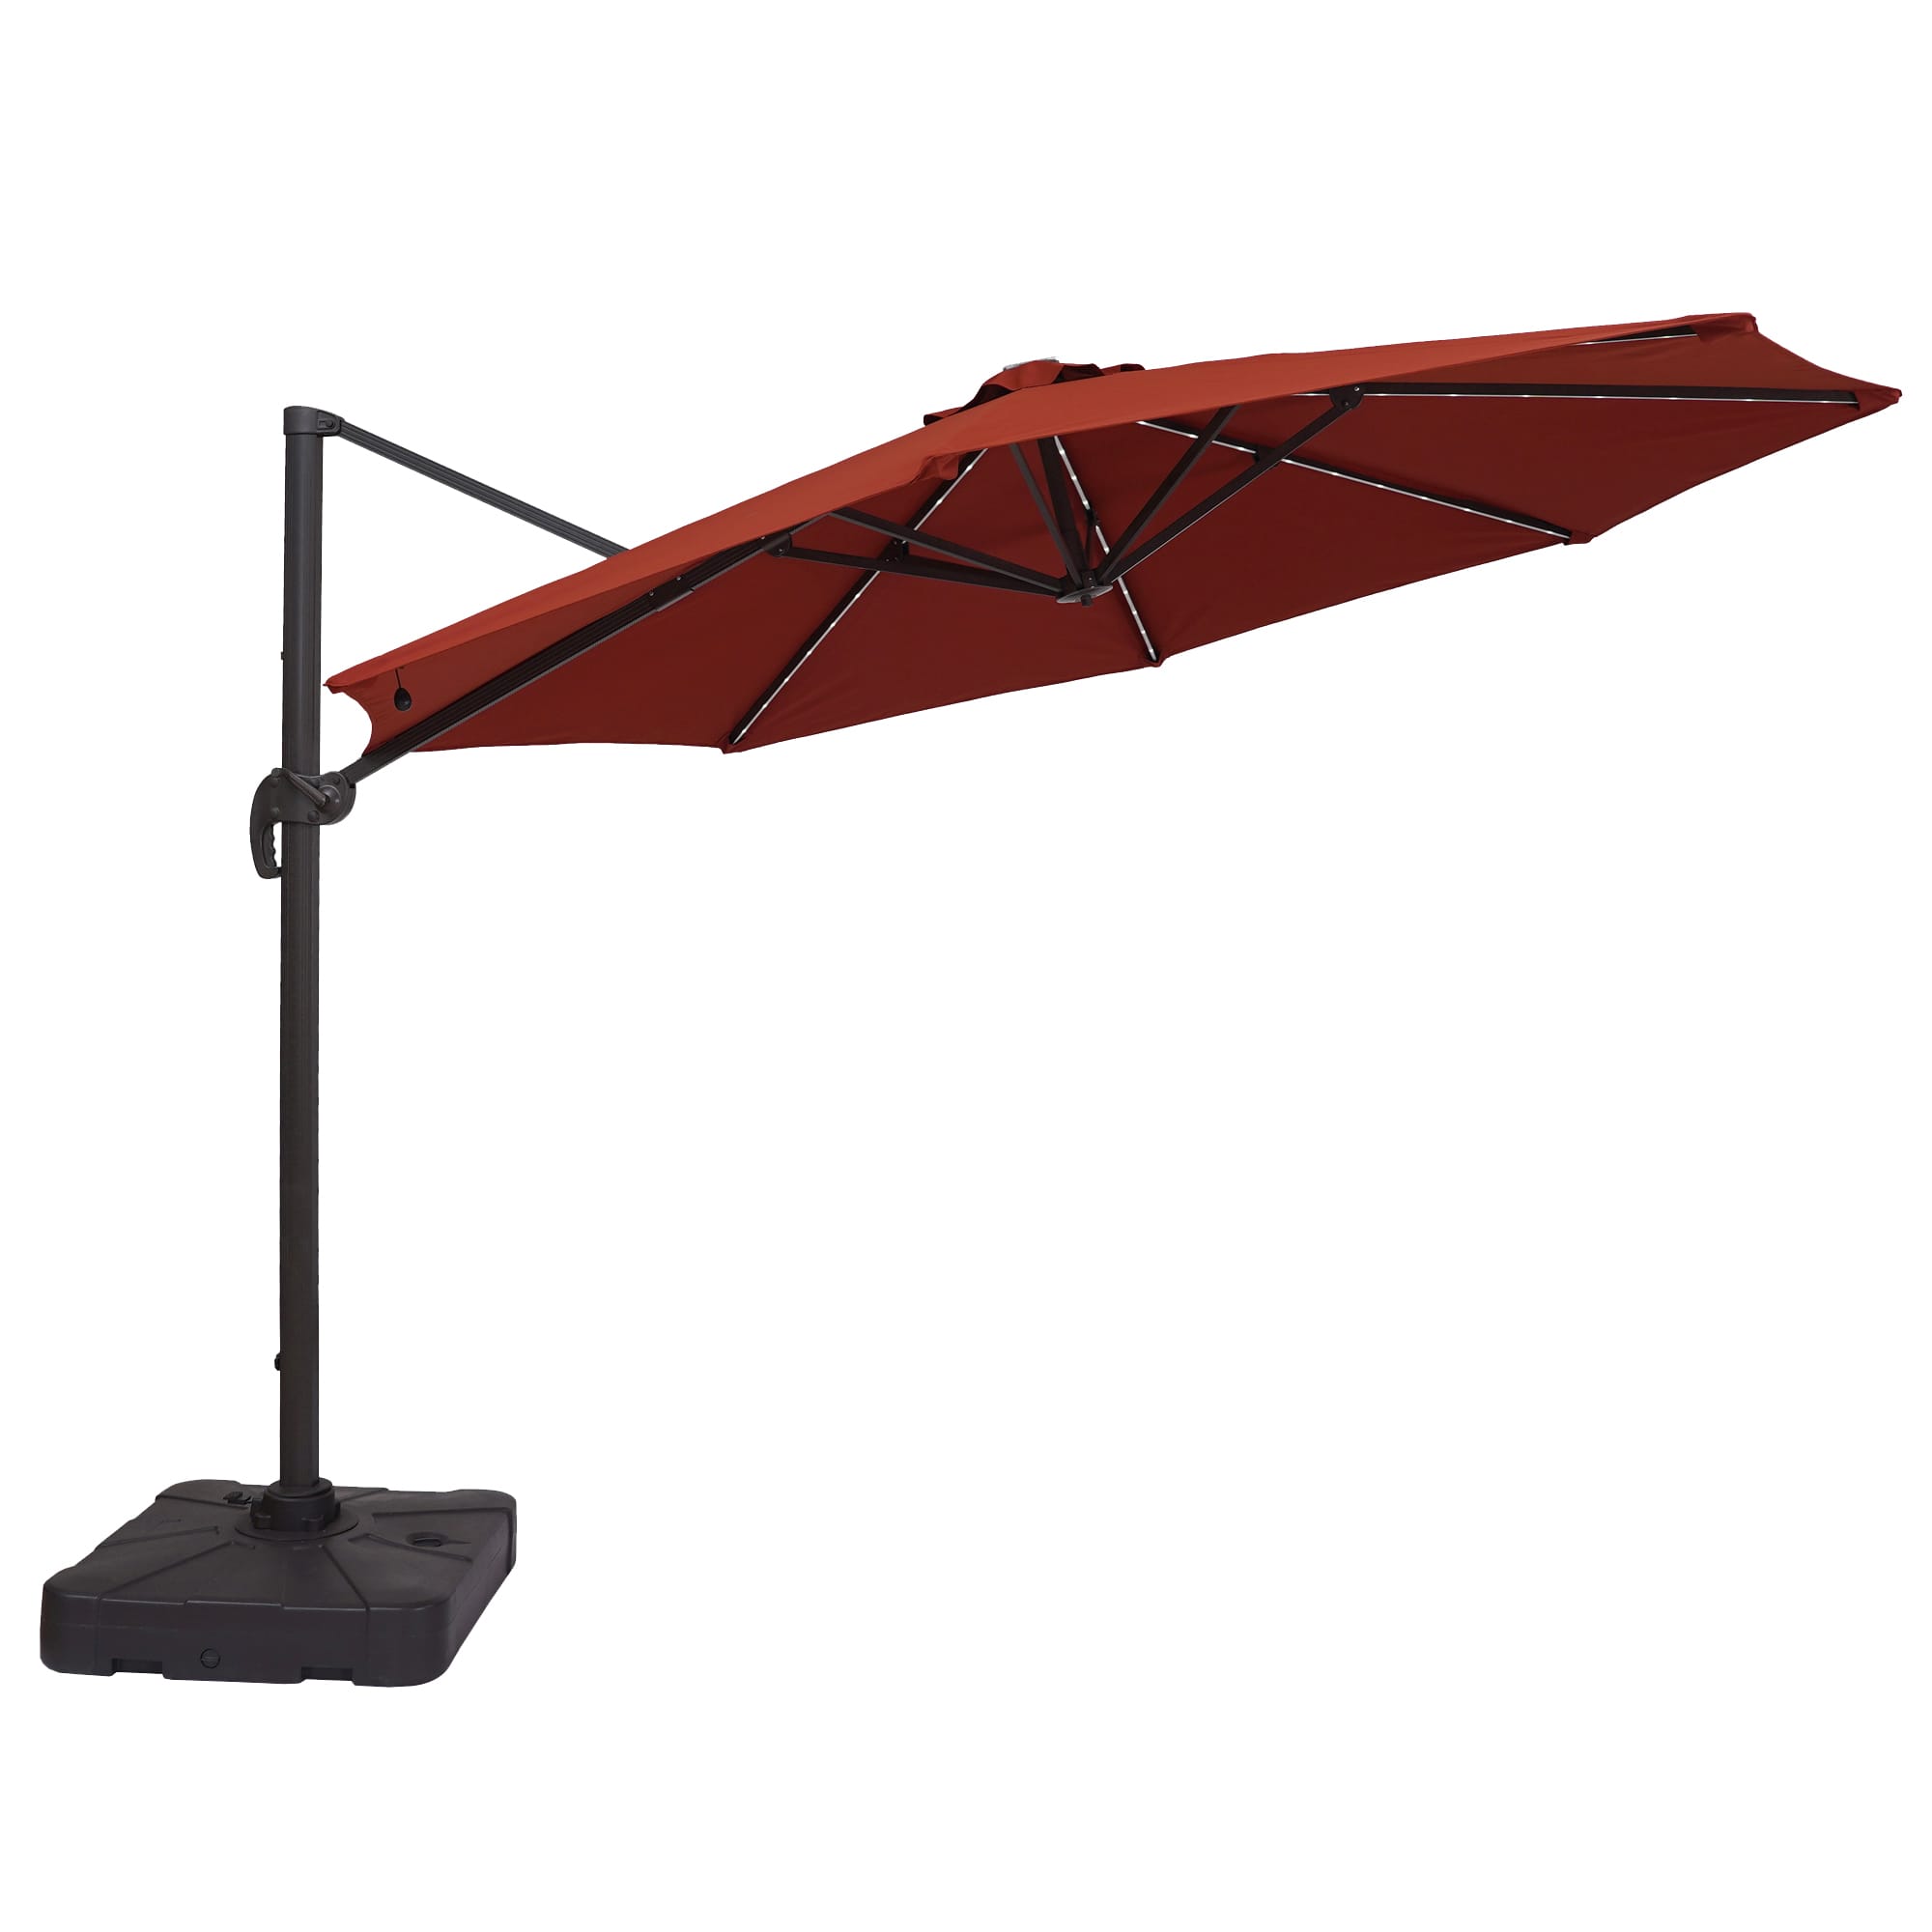 CASAINC 11Ft Solar LED Cantilever Umbrella with Crank and Base